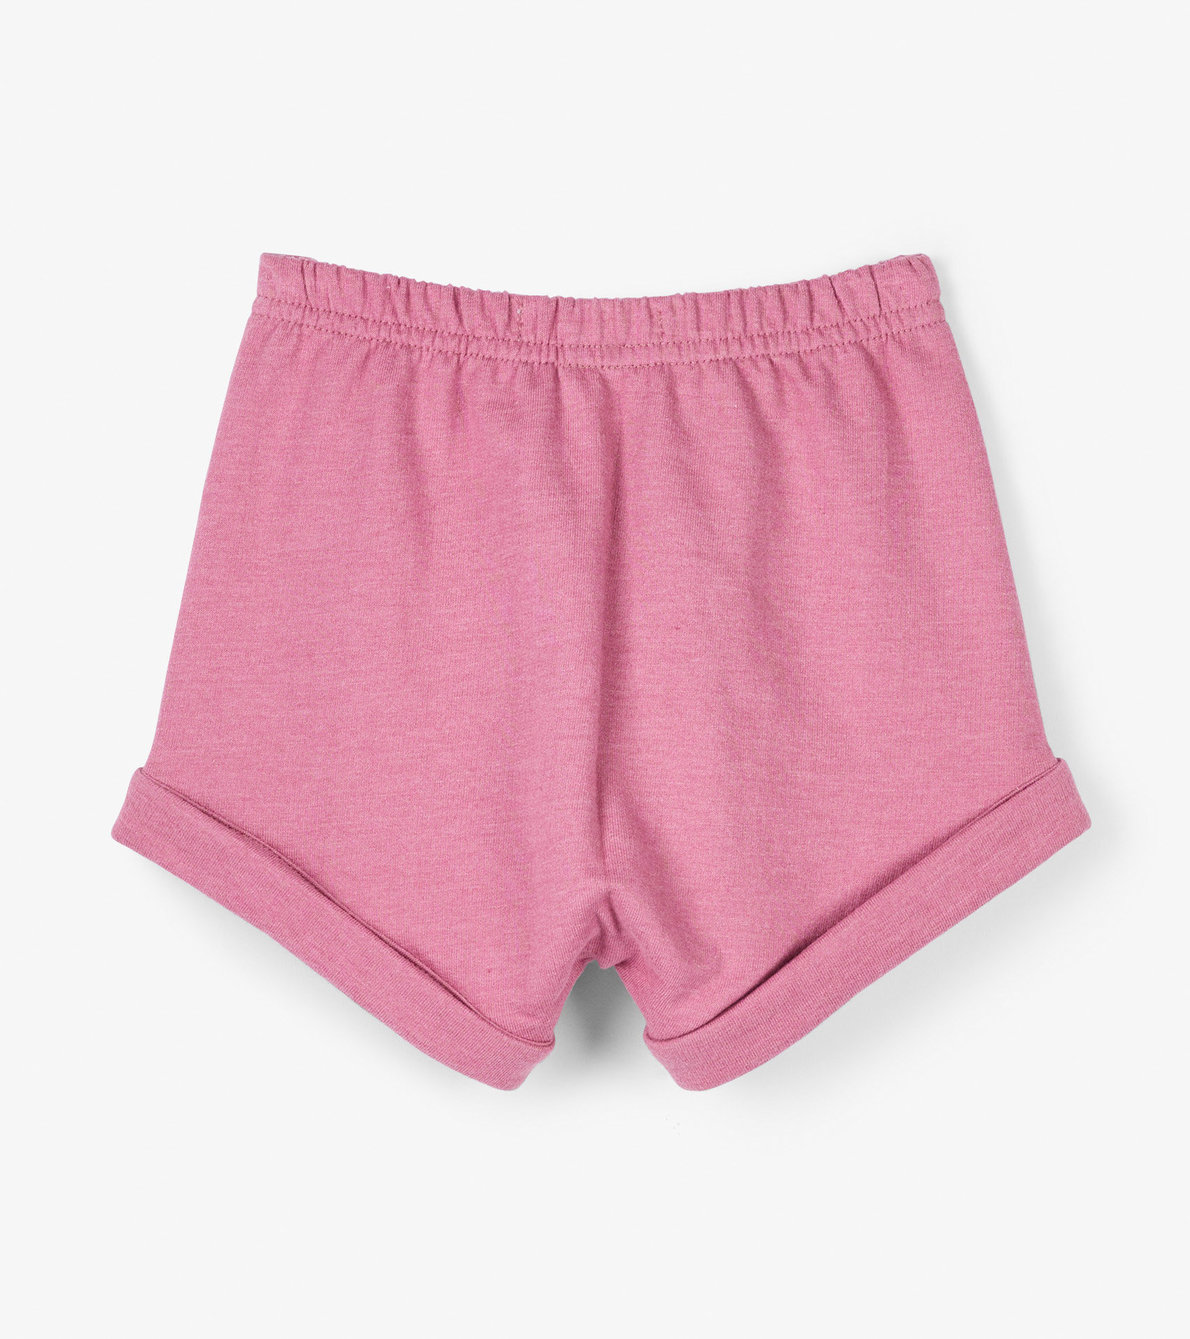 View larger image of Rose Melange Baby Shorts